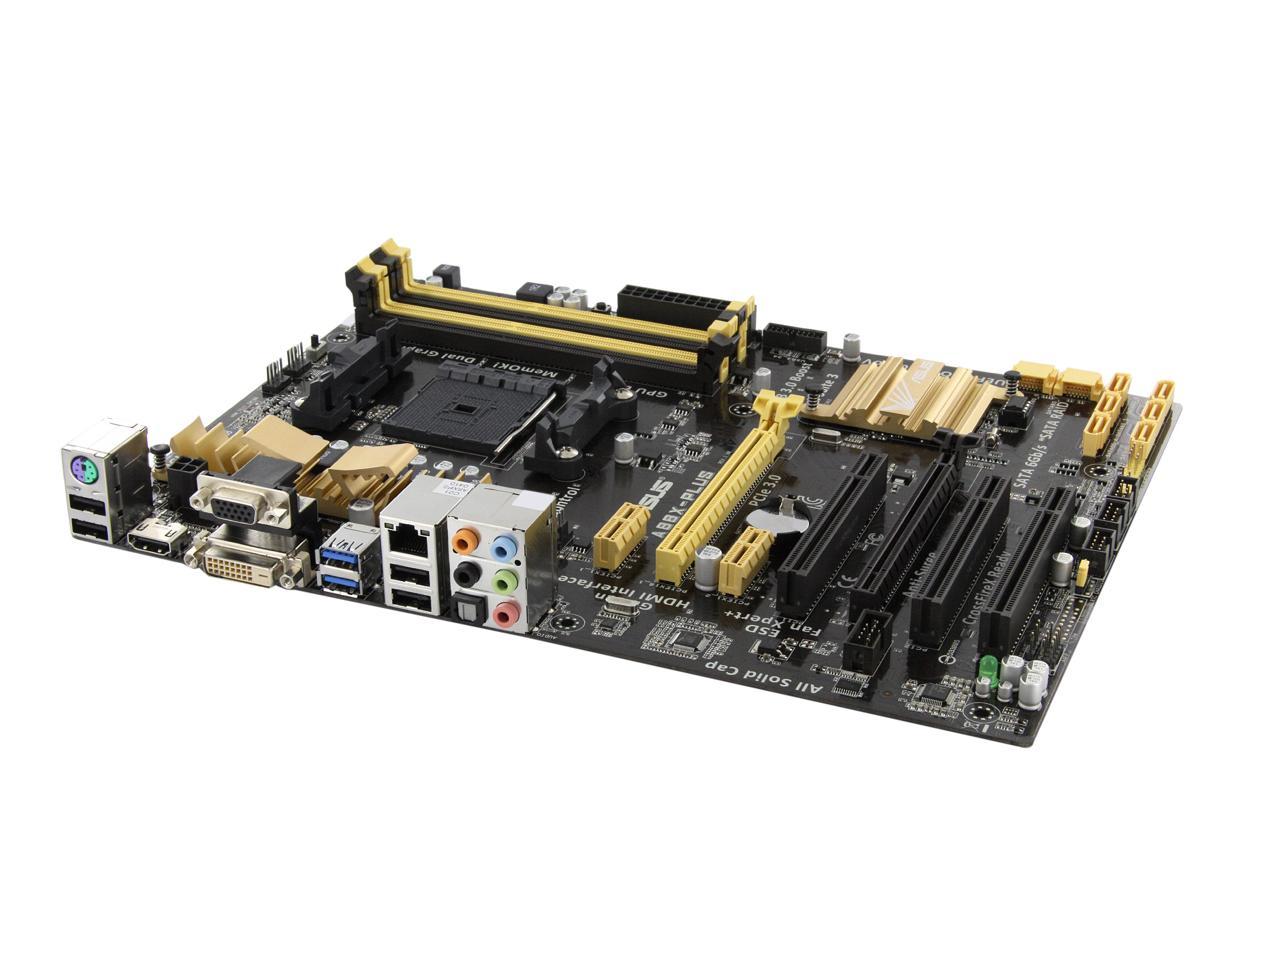 ASUS A88X-PLUS FM2+ / FM2 ATX AMD Motherboard - Newegg.com